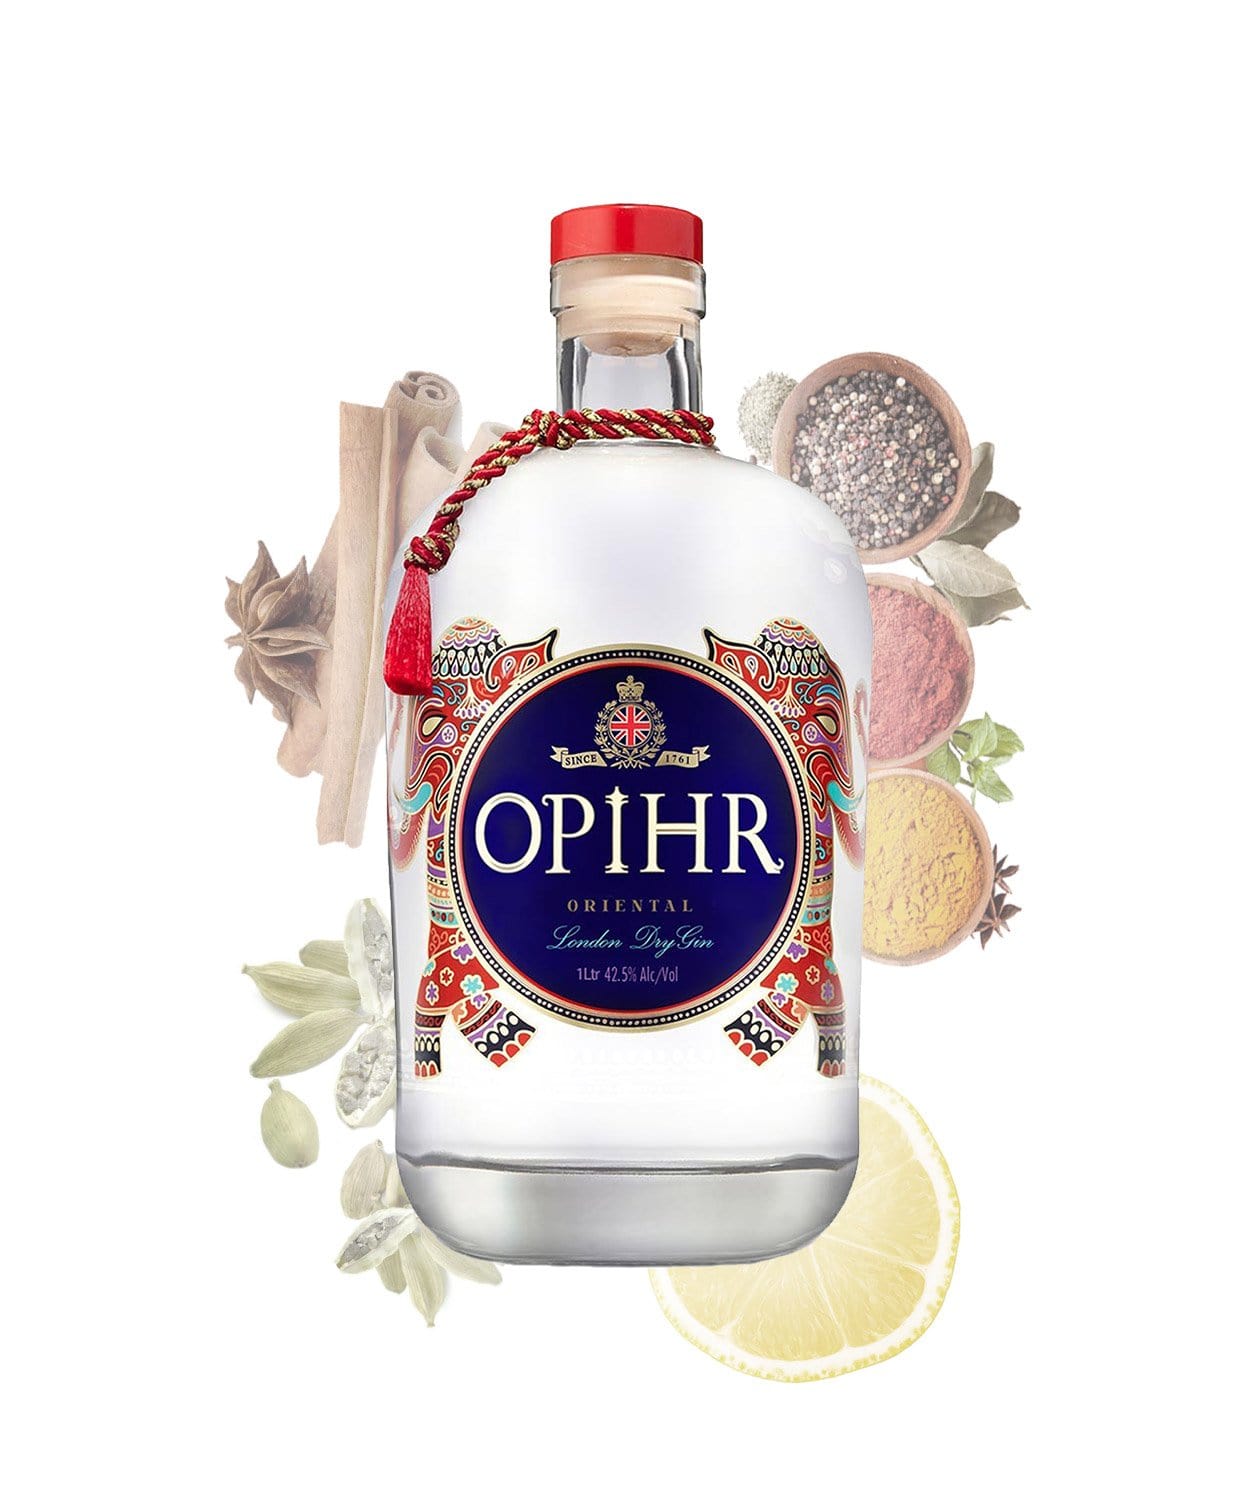 Opihr Oriental Spiced Gin 0,7l (42,2%) Dry London